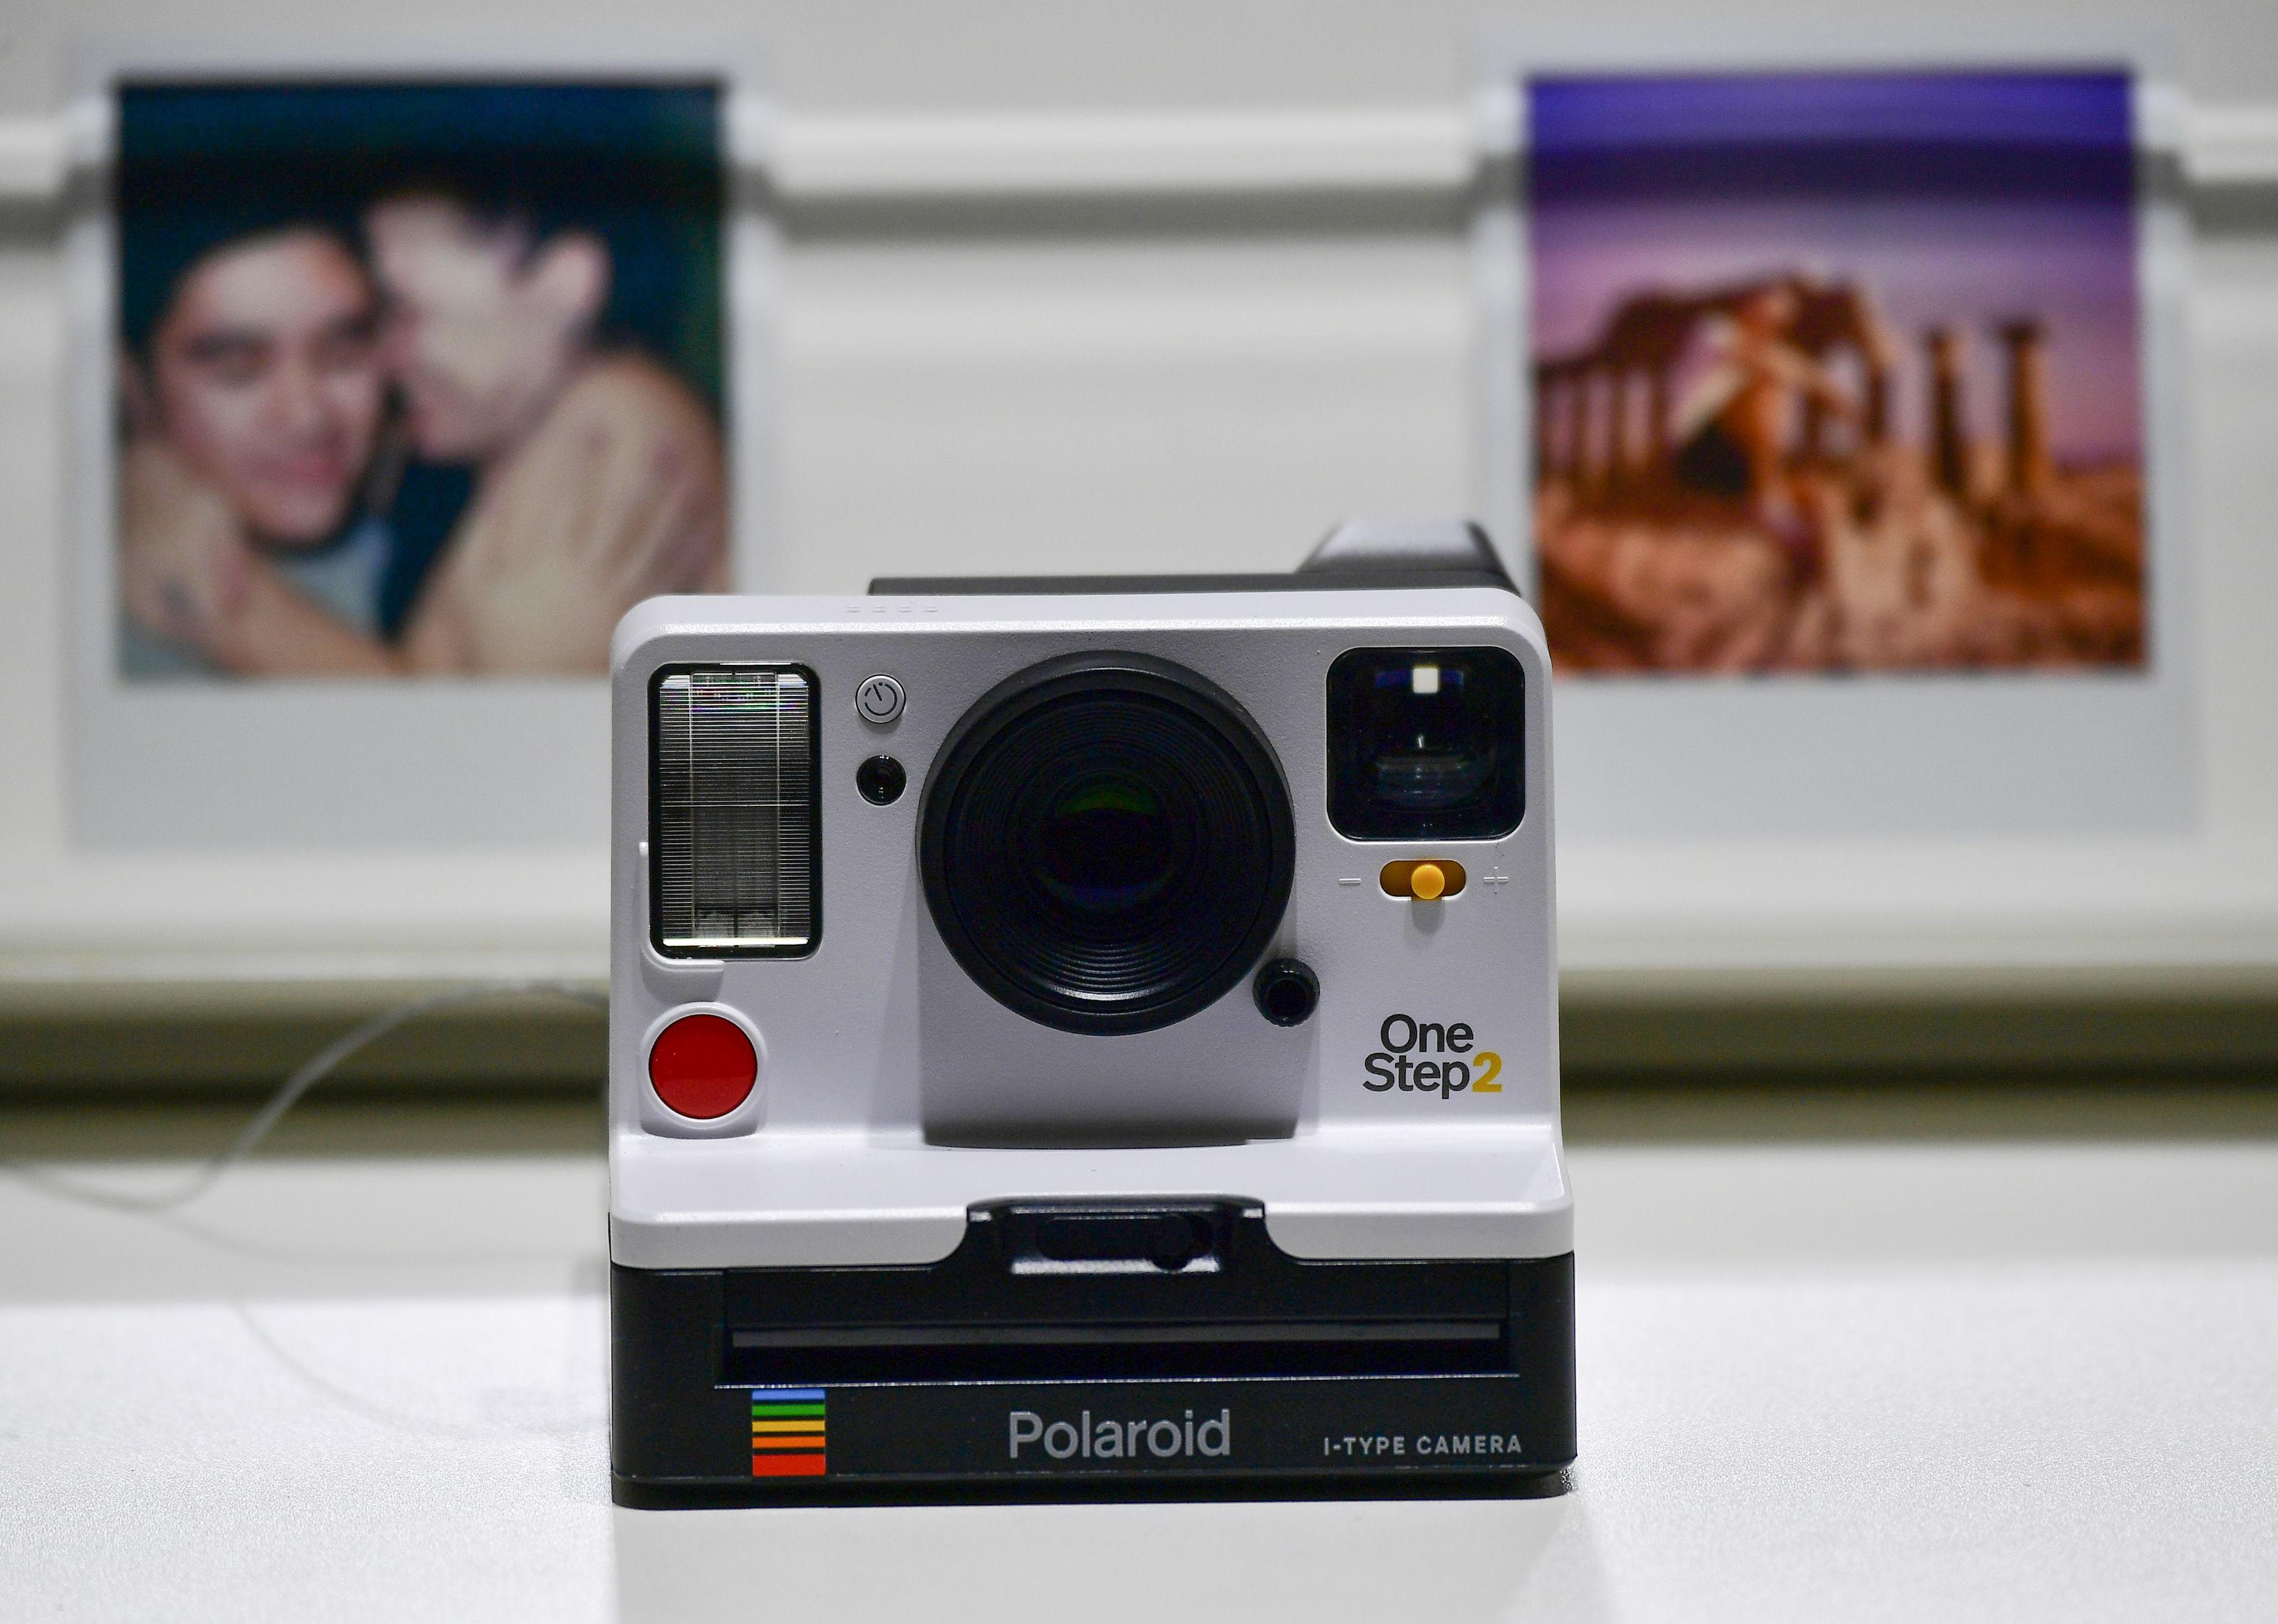 A Polaroid camera on display.